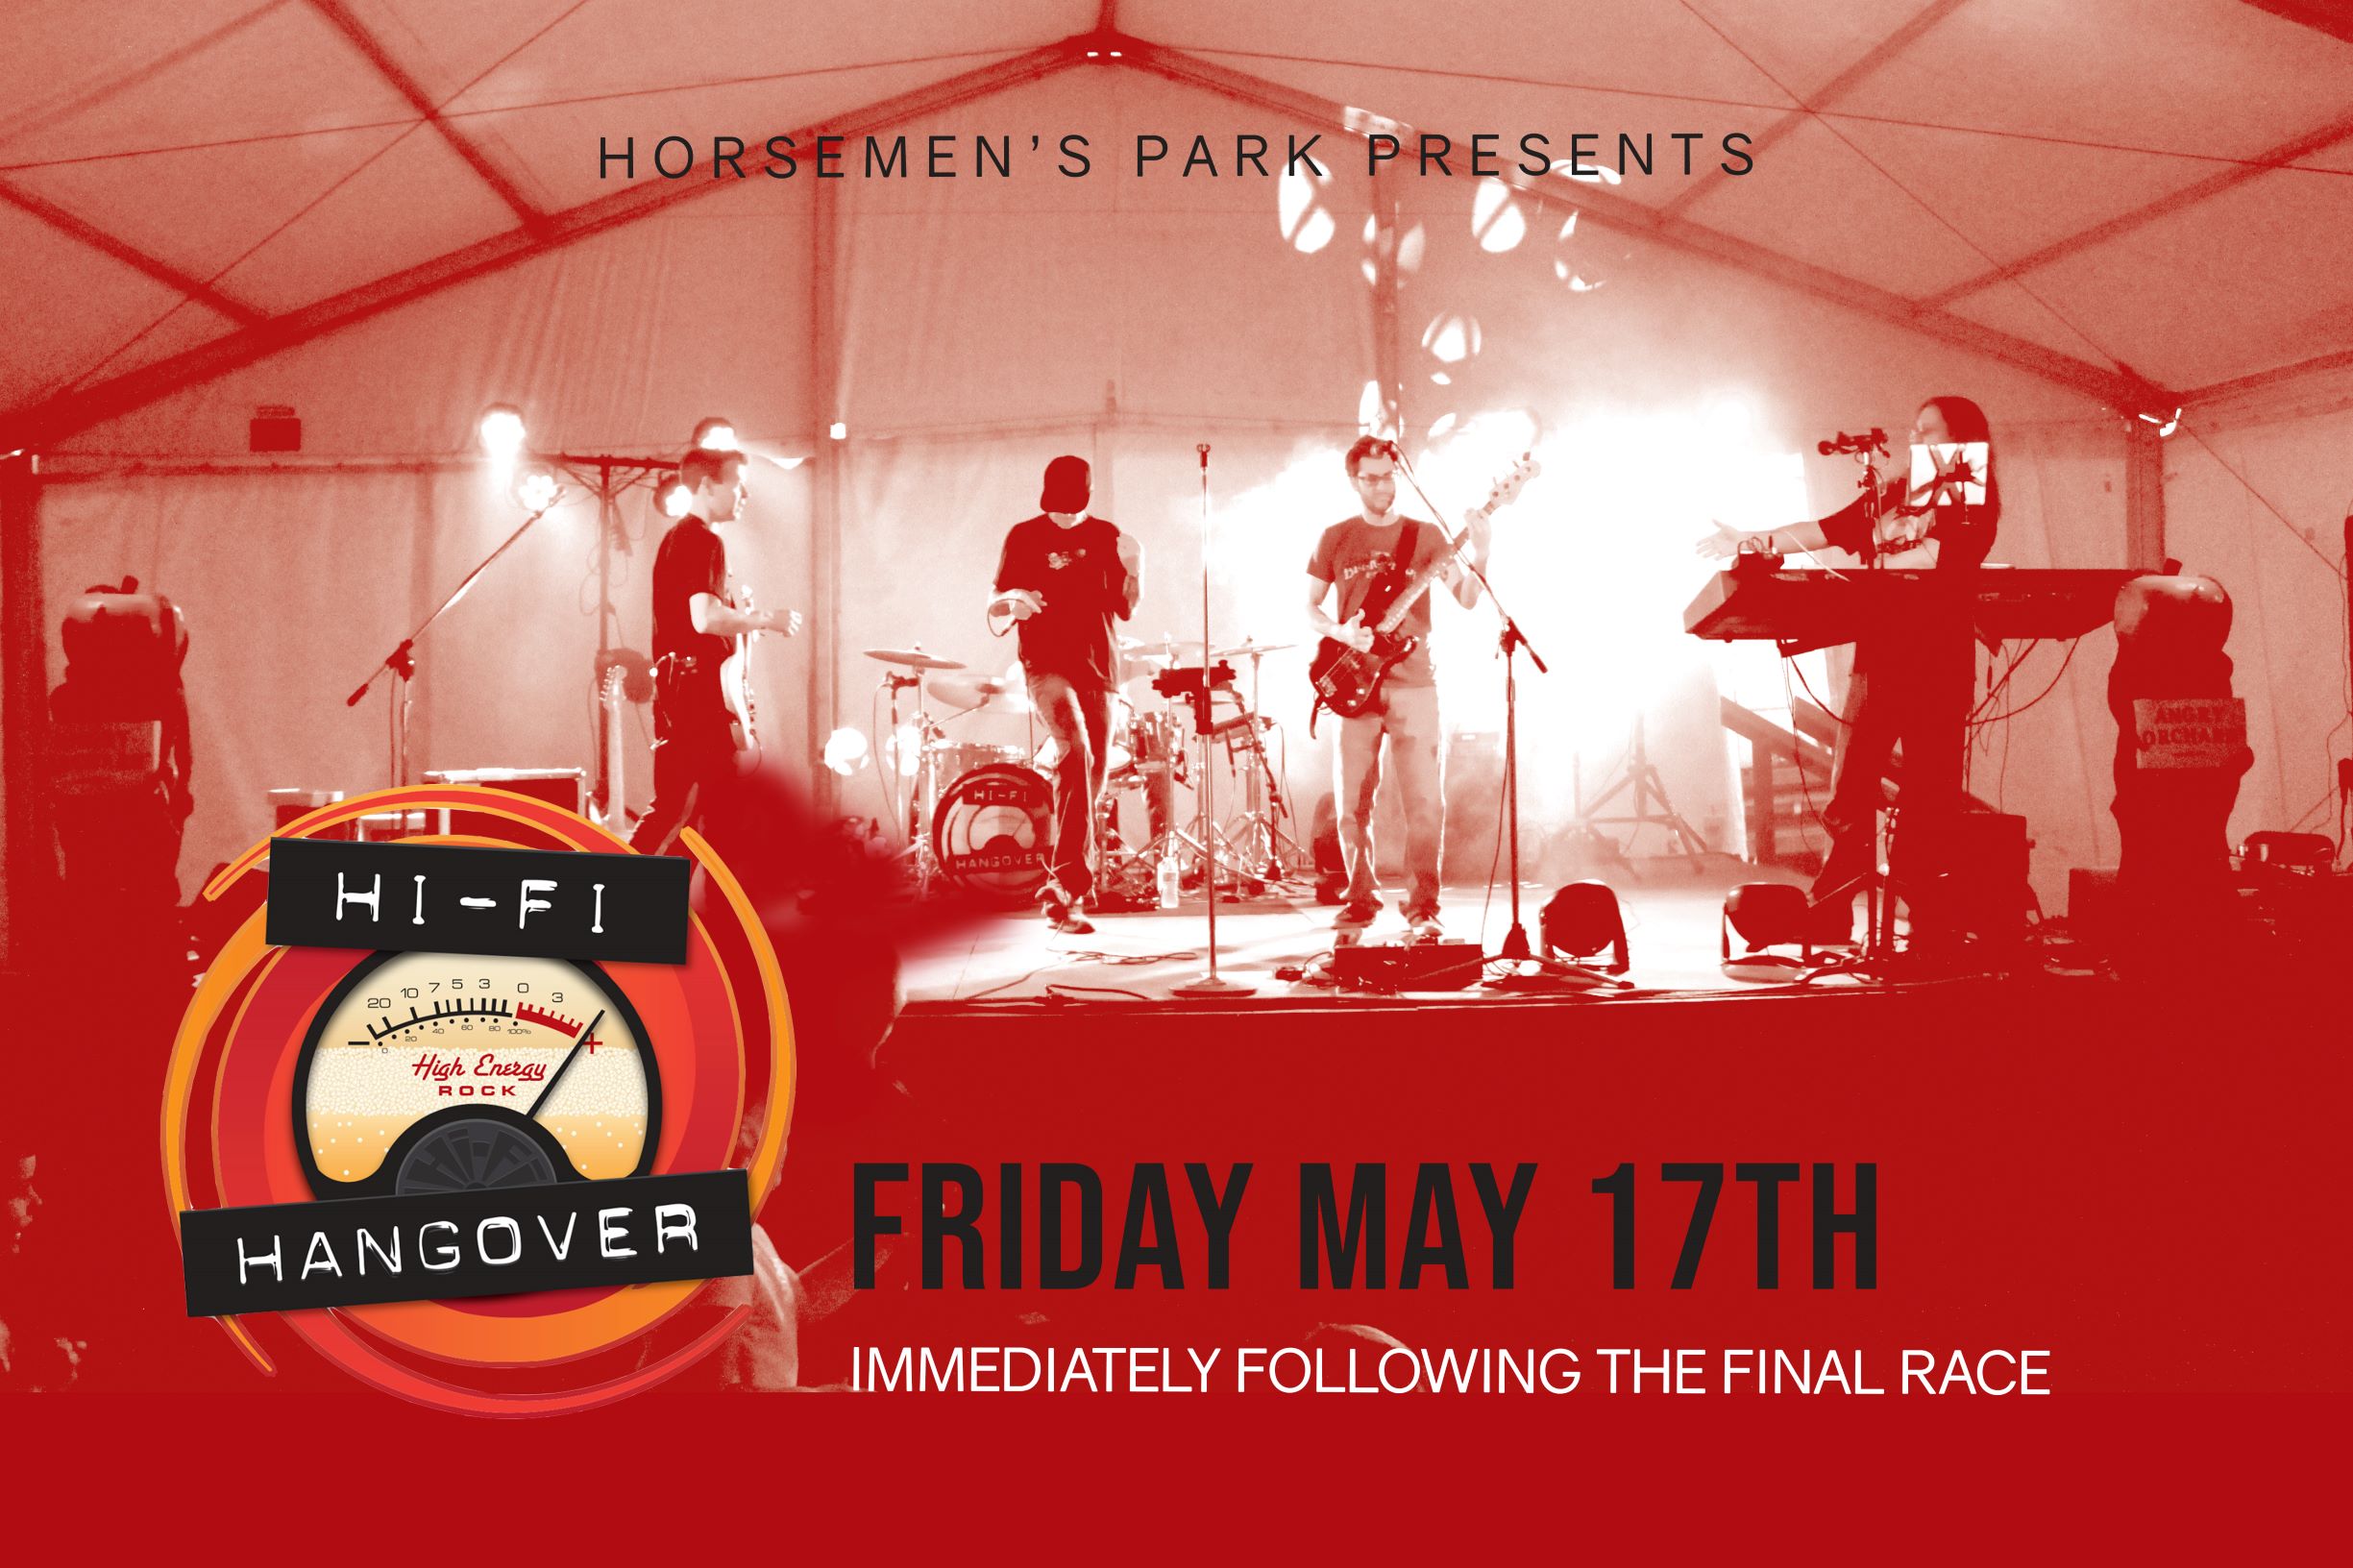 Hi-Fi Hangover | Horsemen's Park - Live Horse Racing, Simulcast ...